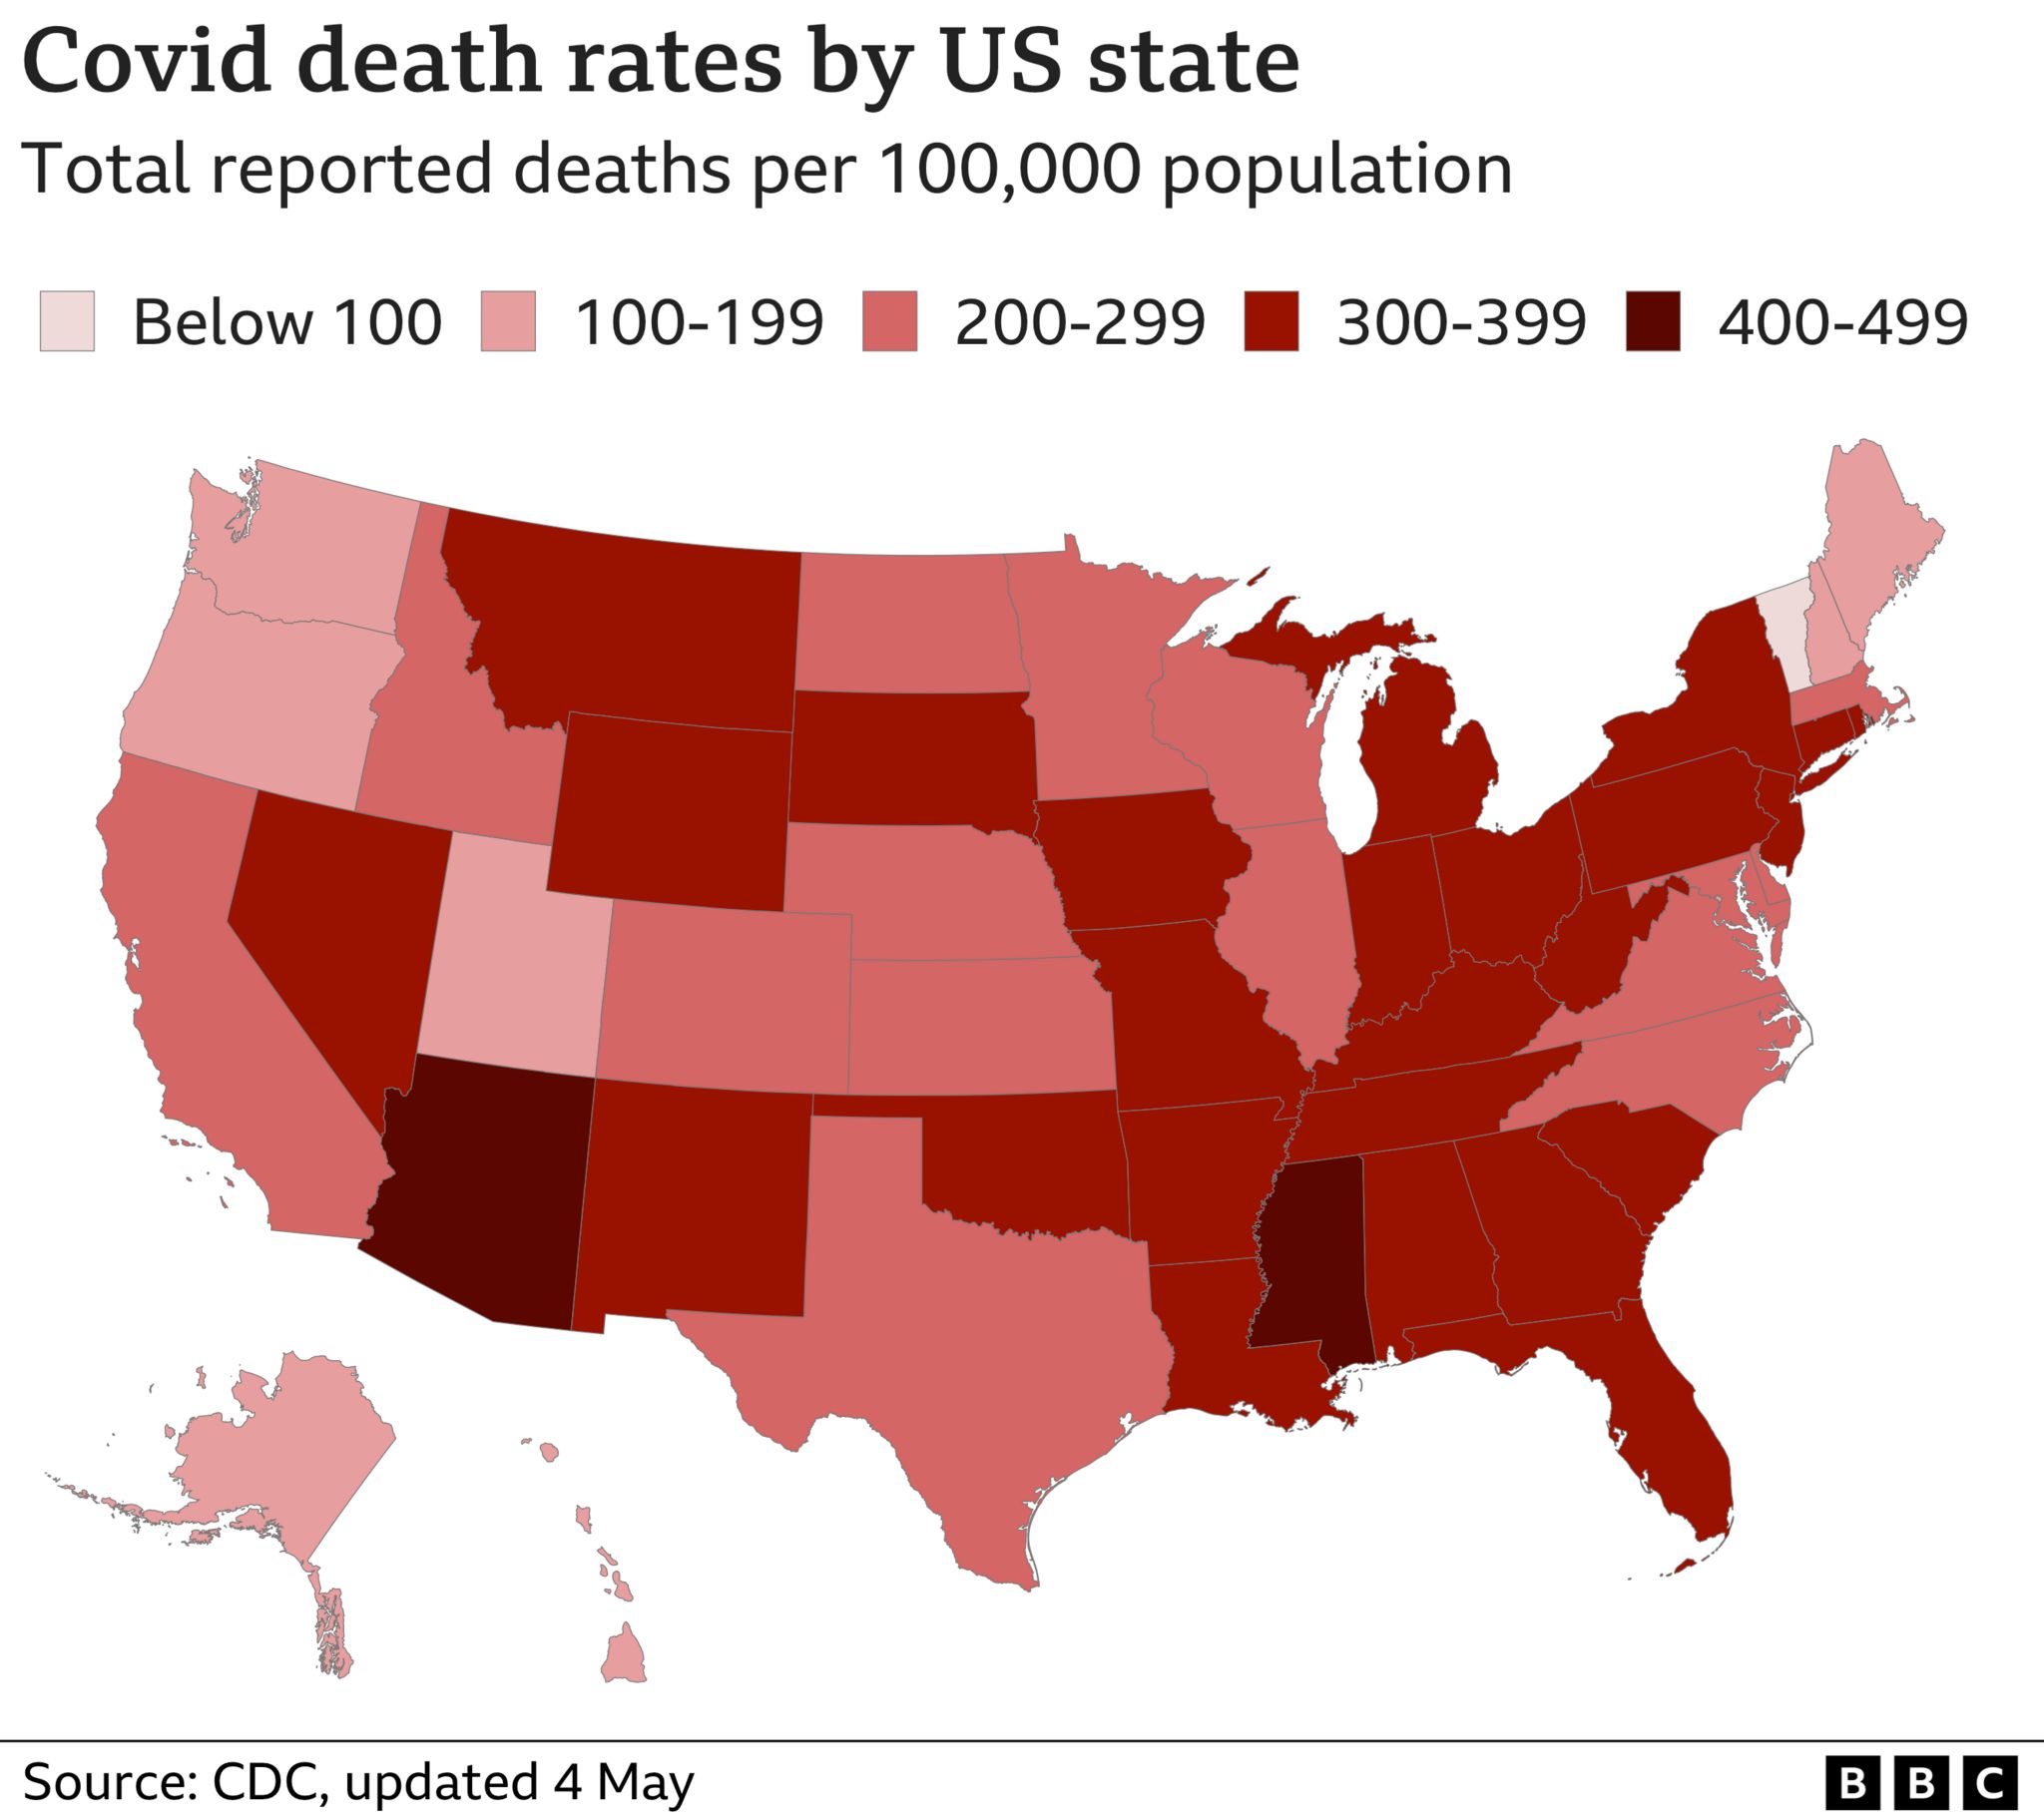 Per capita Covid death rates by US state